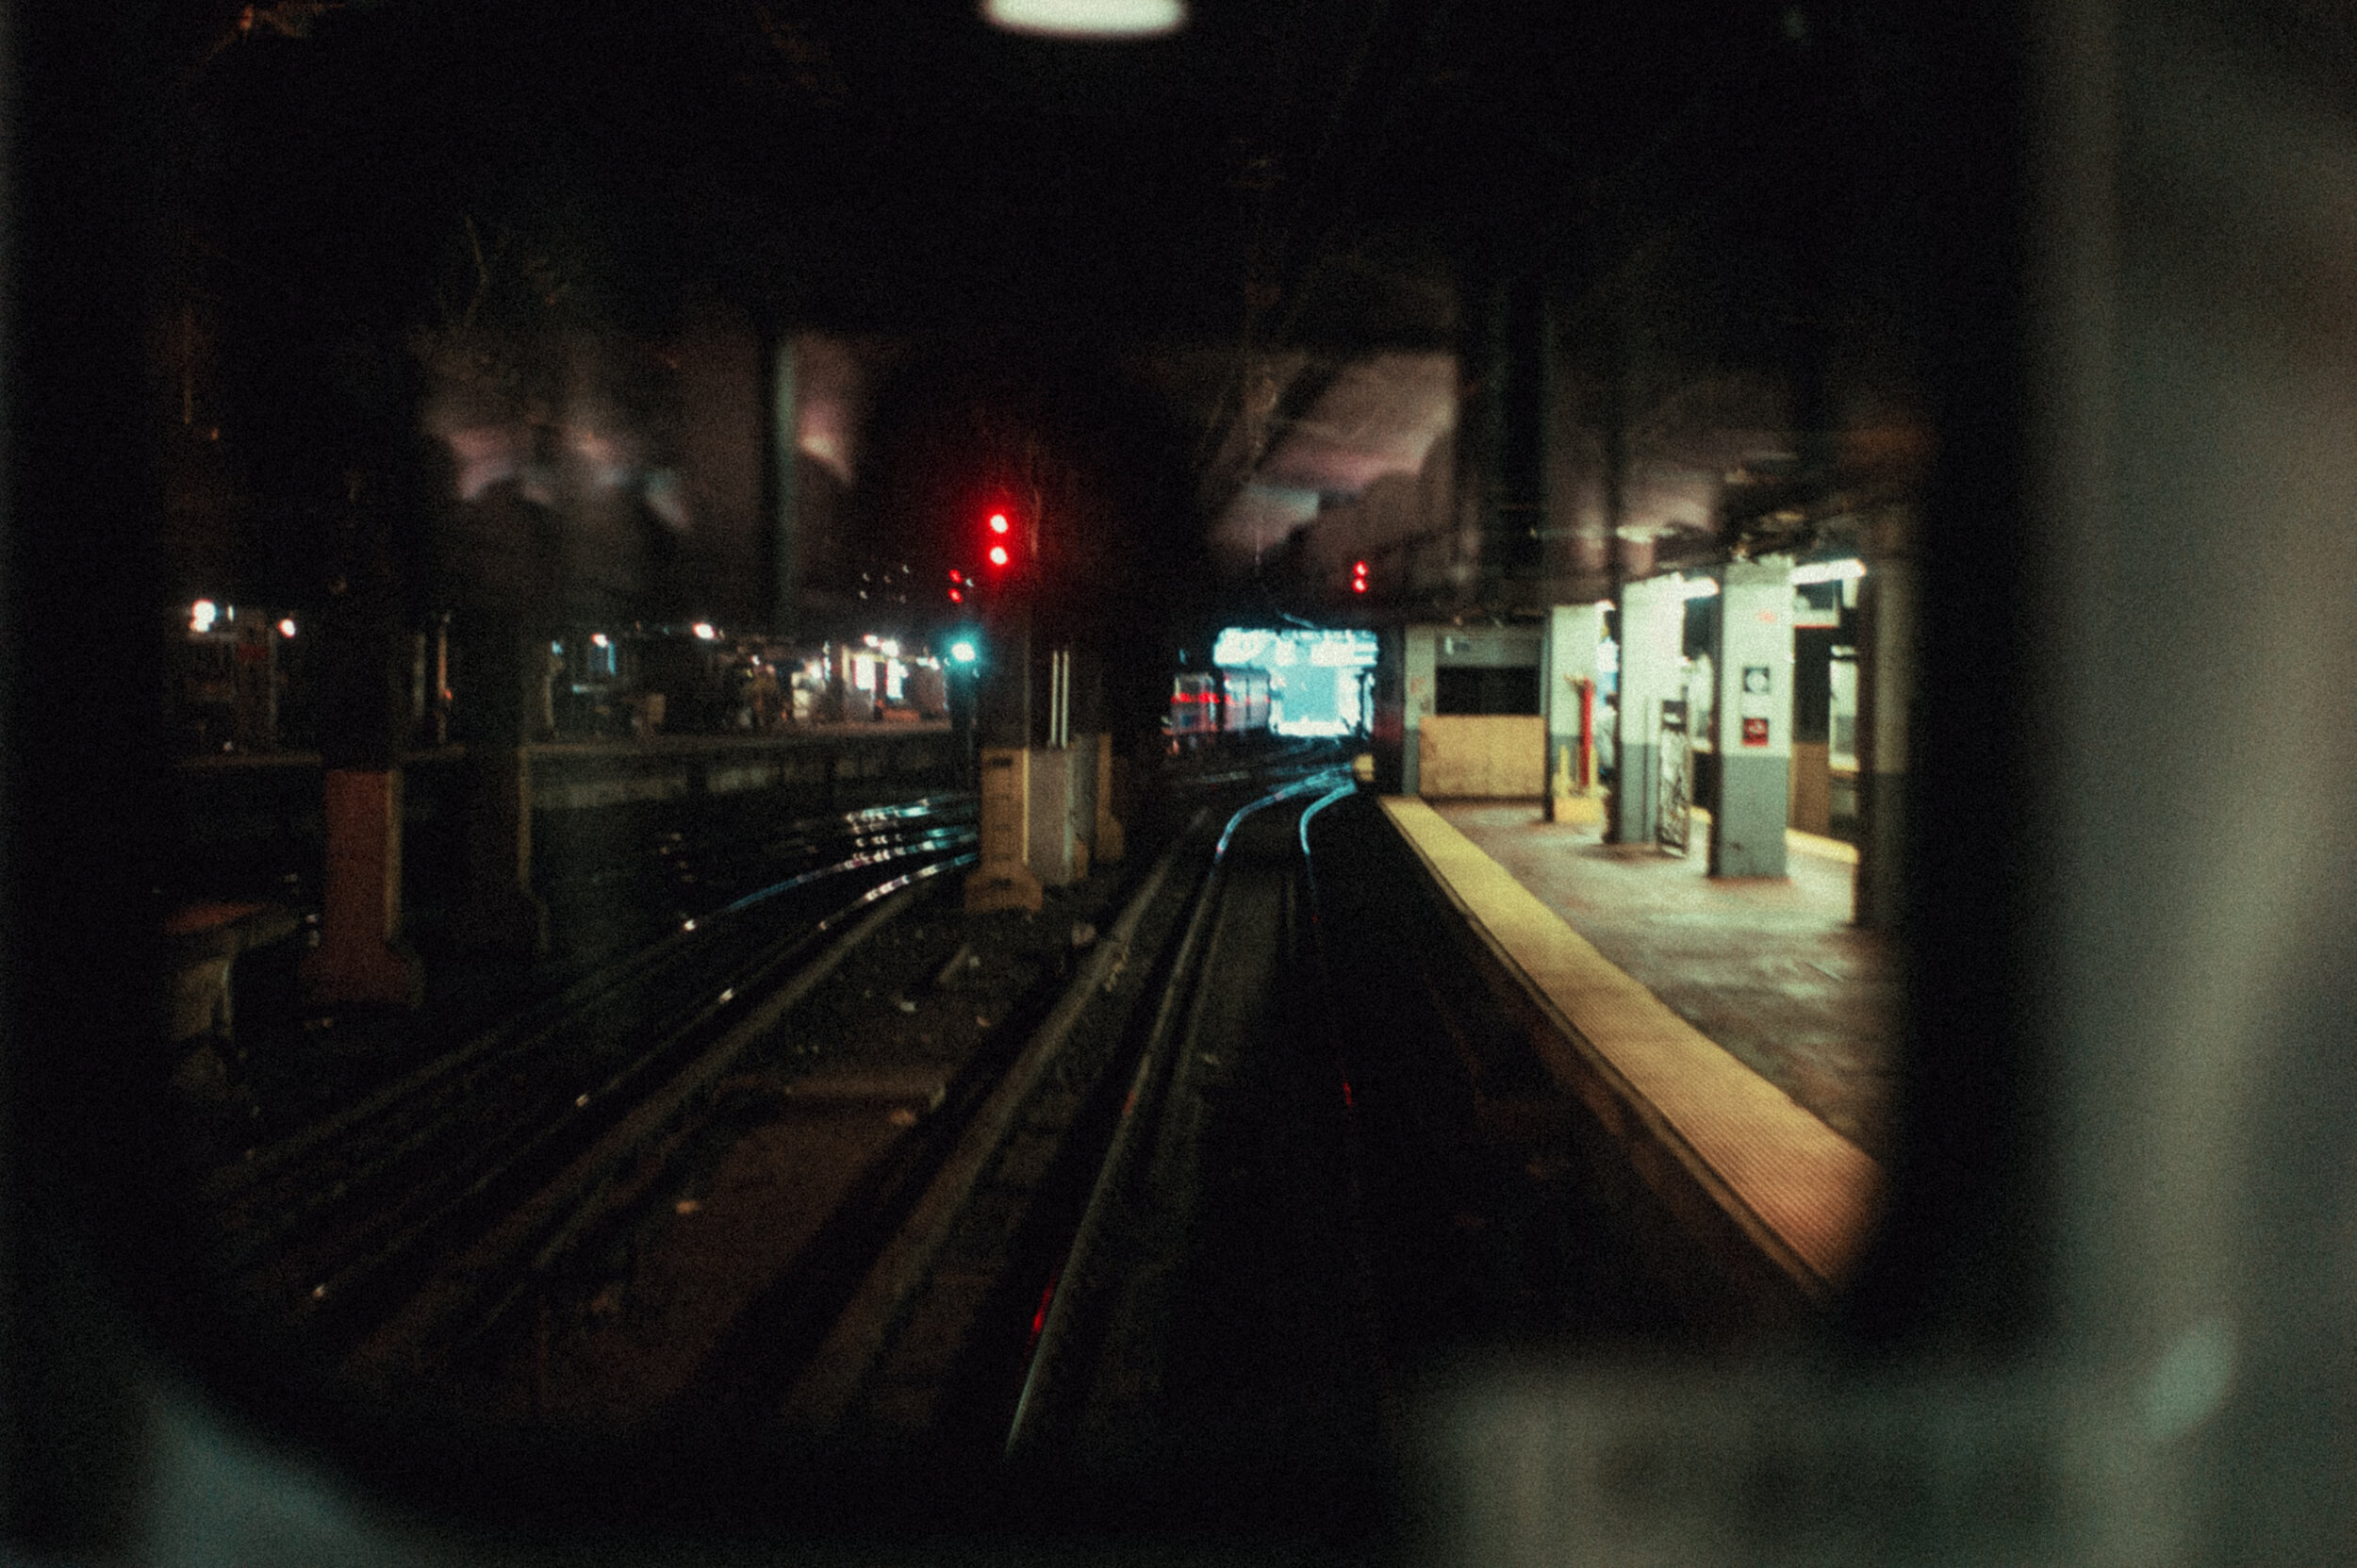 NYC Subway.jpg